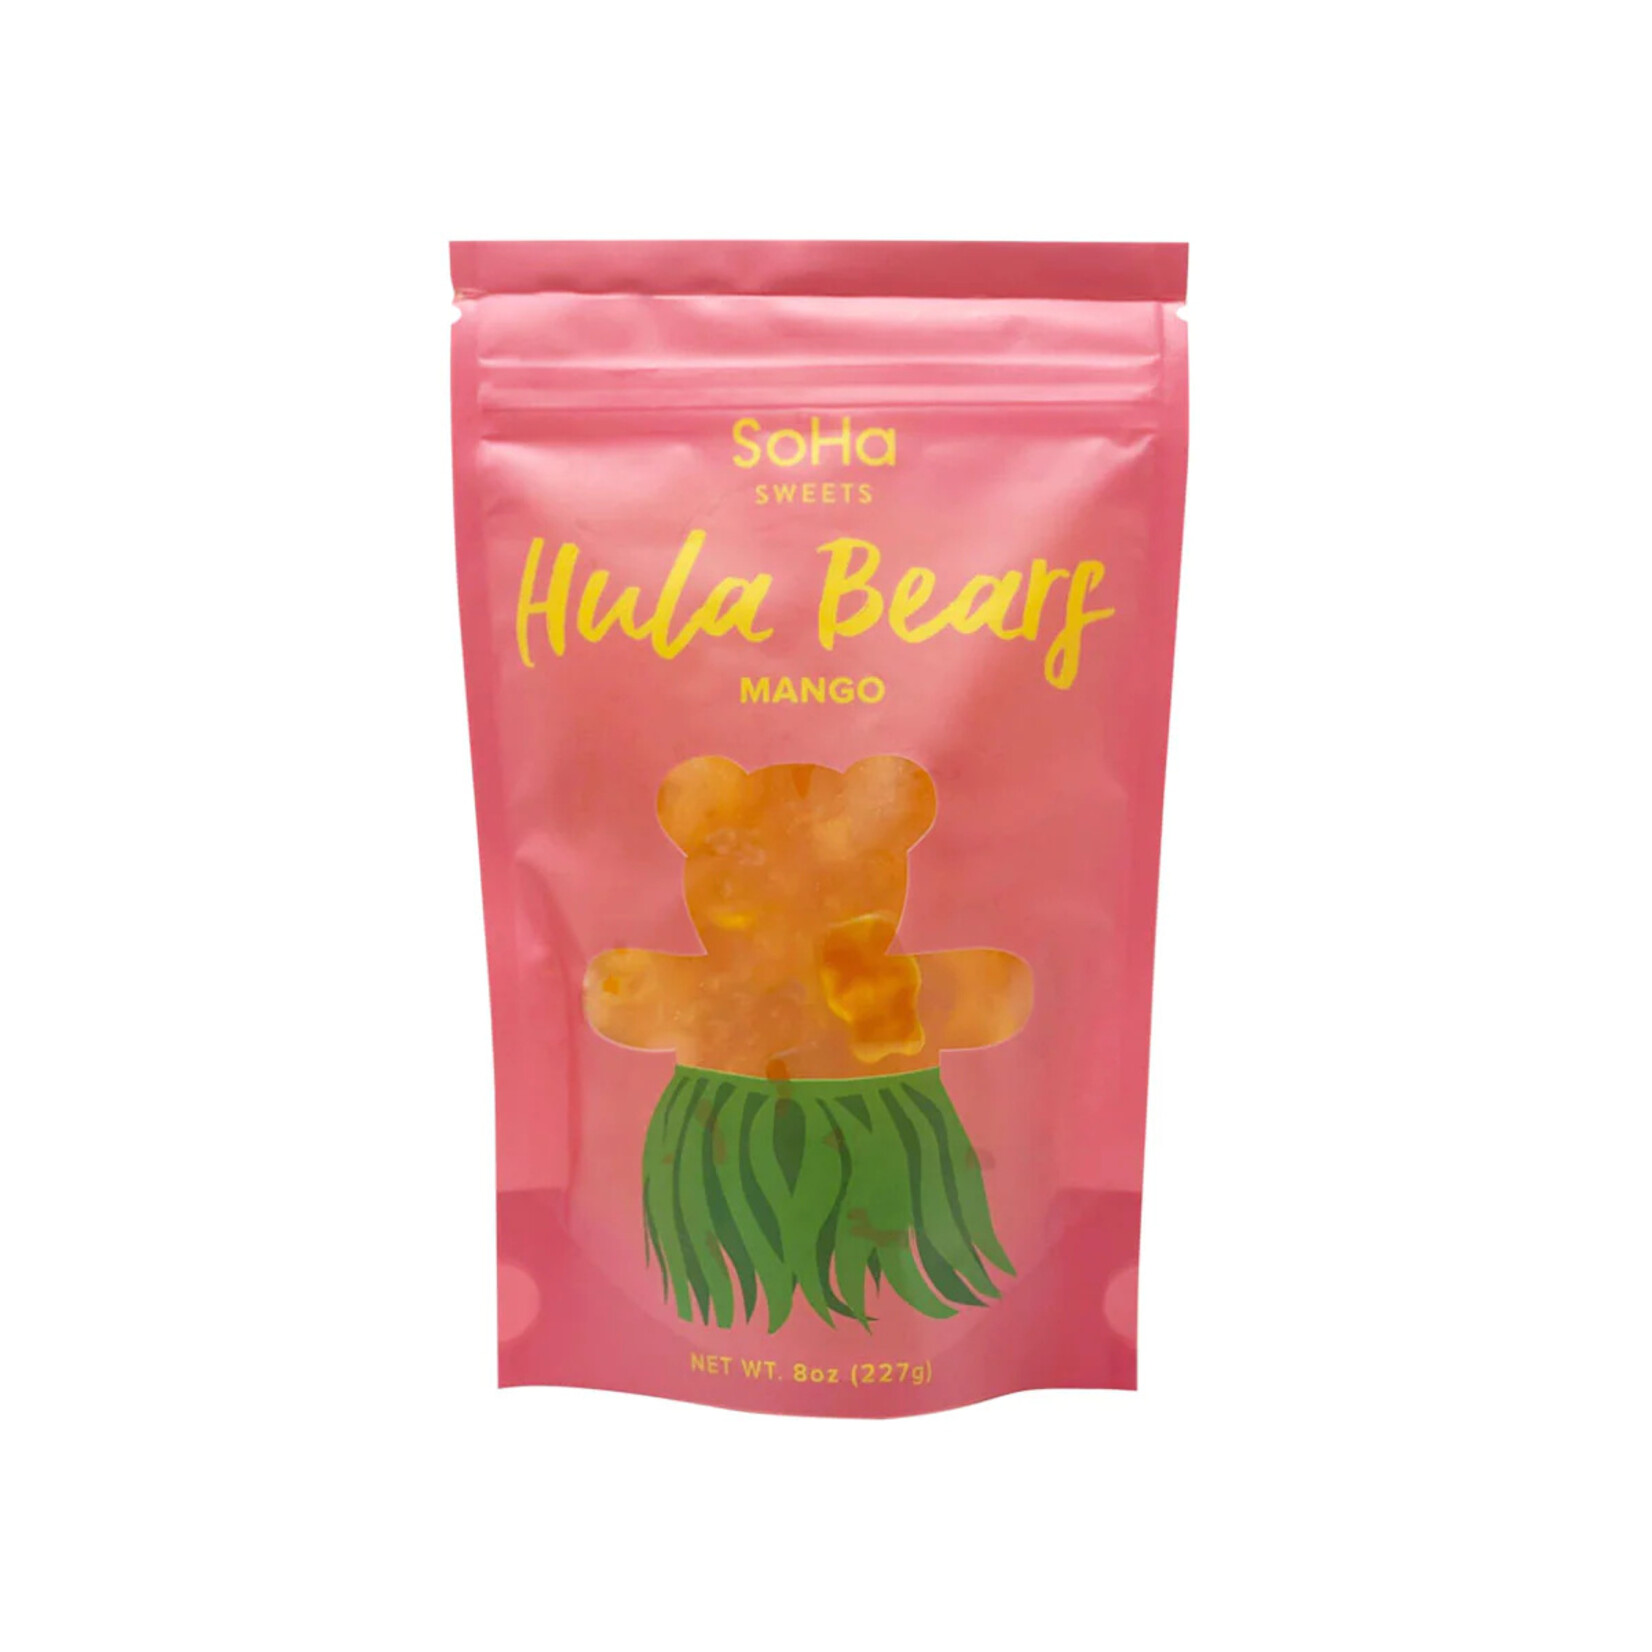 SoHa Sweets Hula Bears 8oz